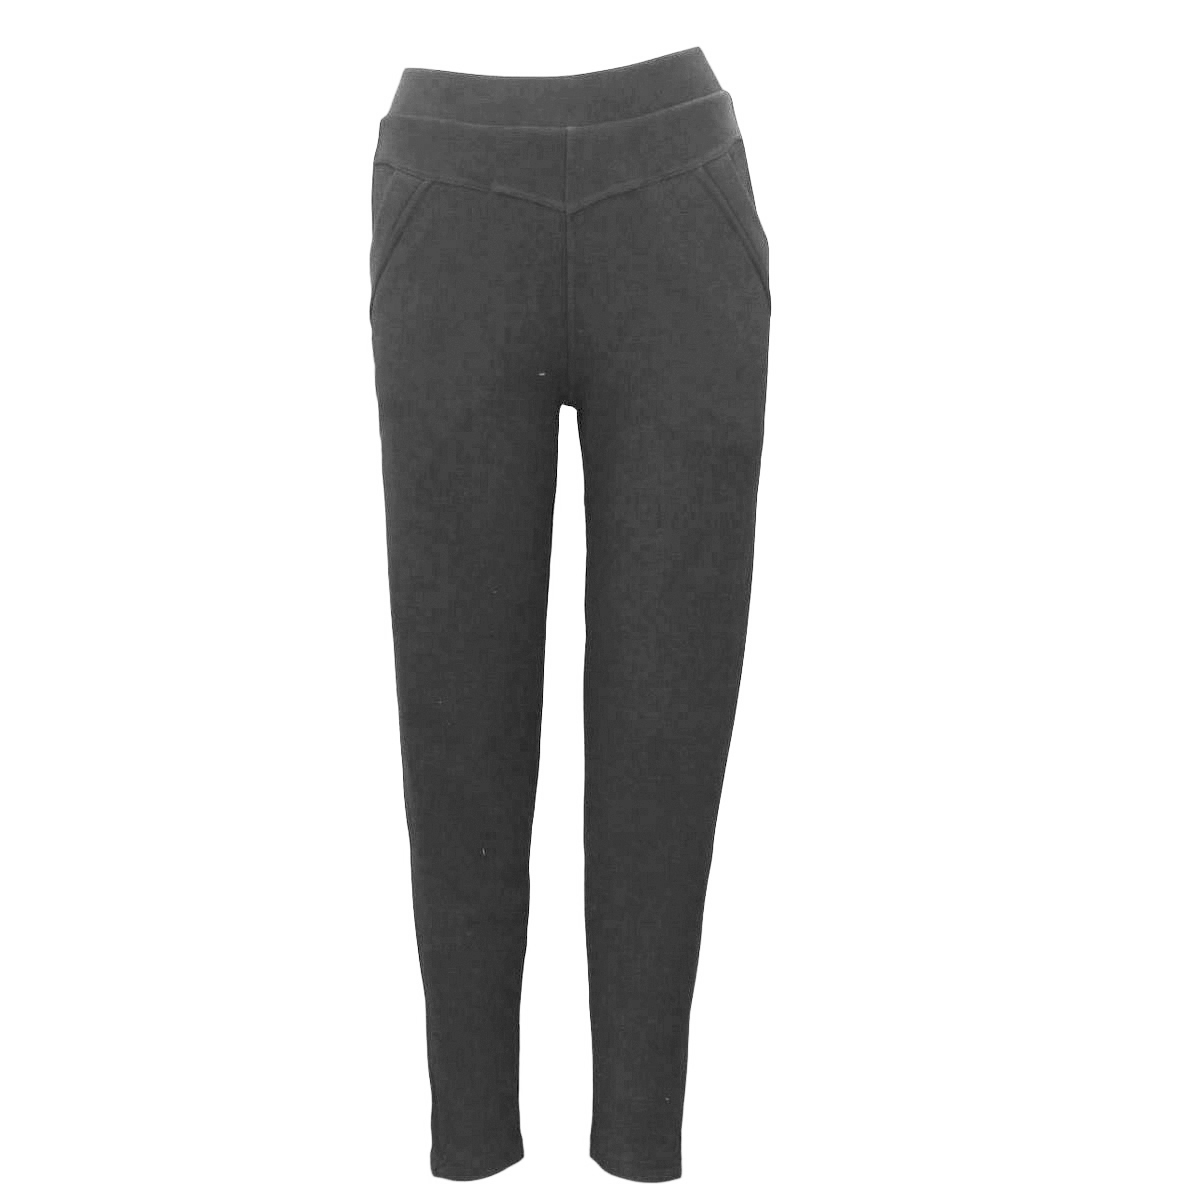 Women's Stretch Leggings Skinny Slim Pants w Pockets Casual Trousers | eBay